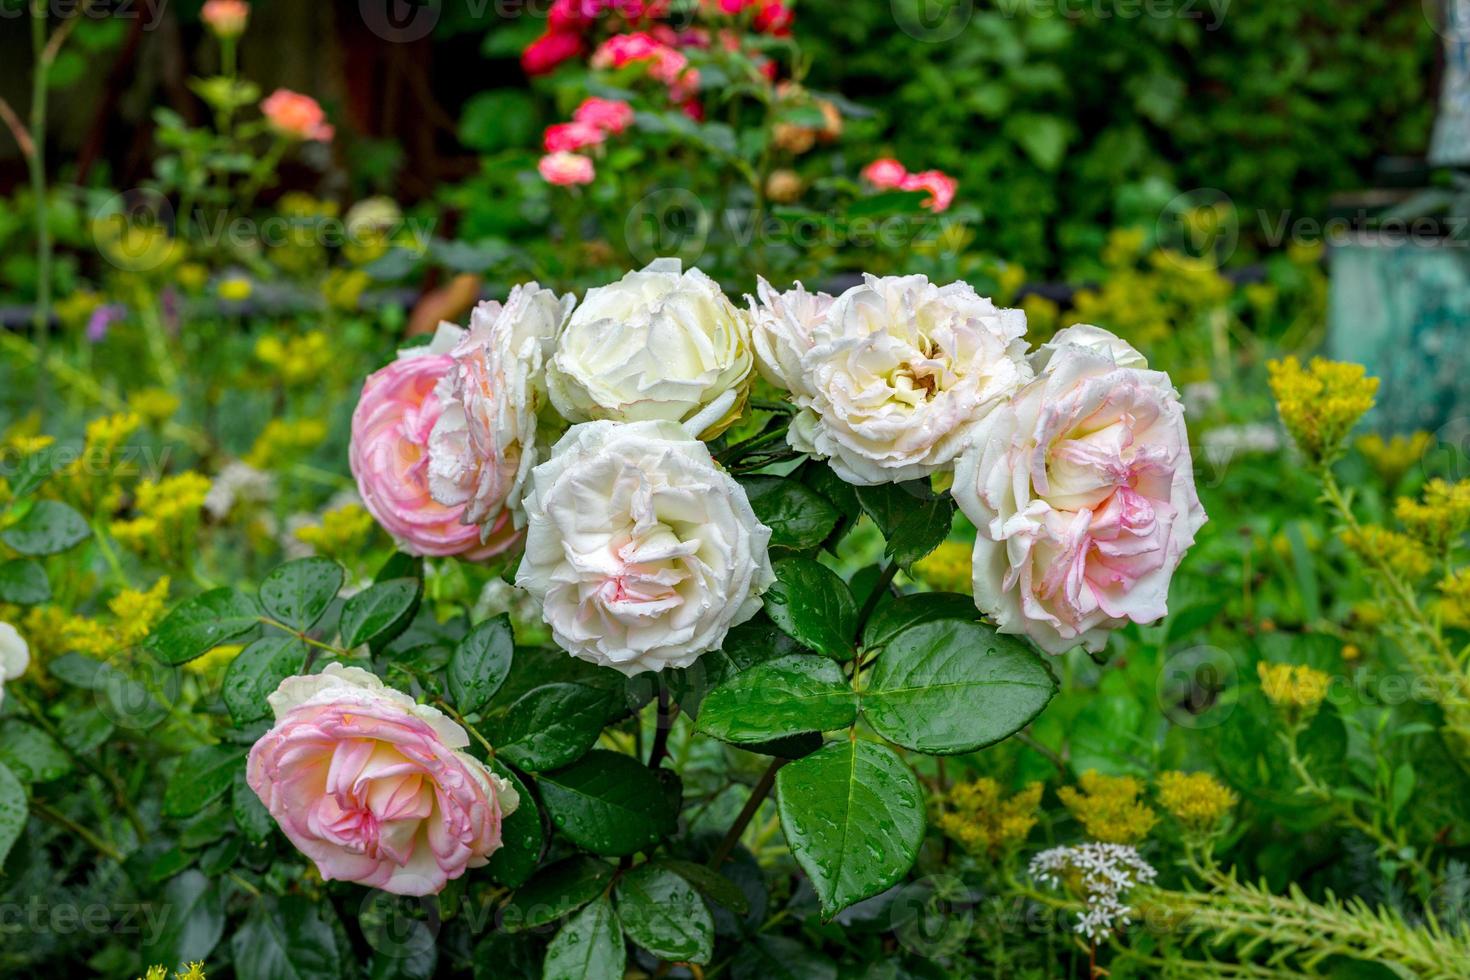 Roses on a bush in a garden. Shallow DOF photo